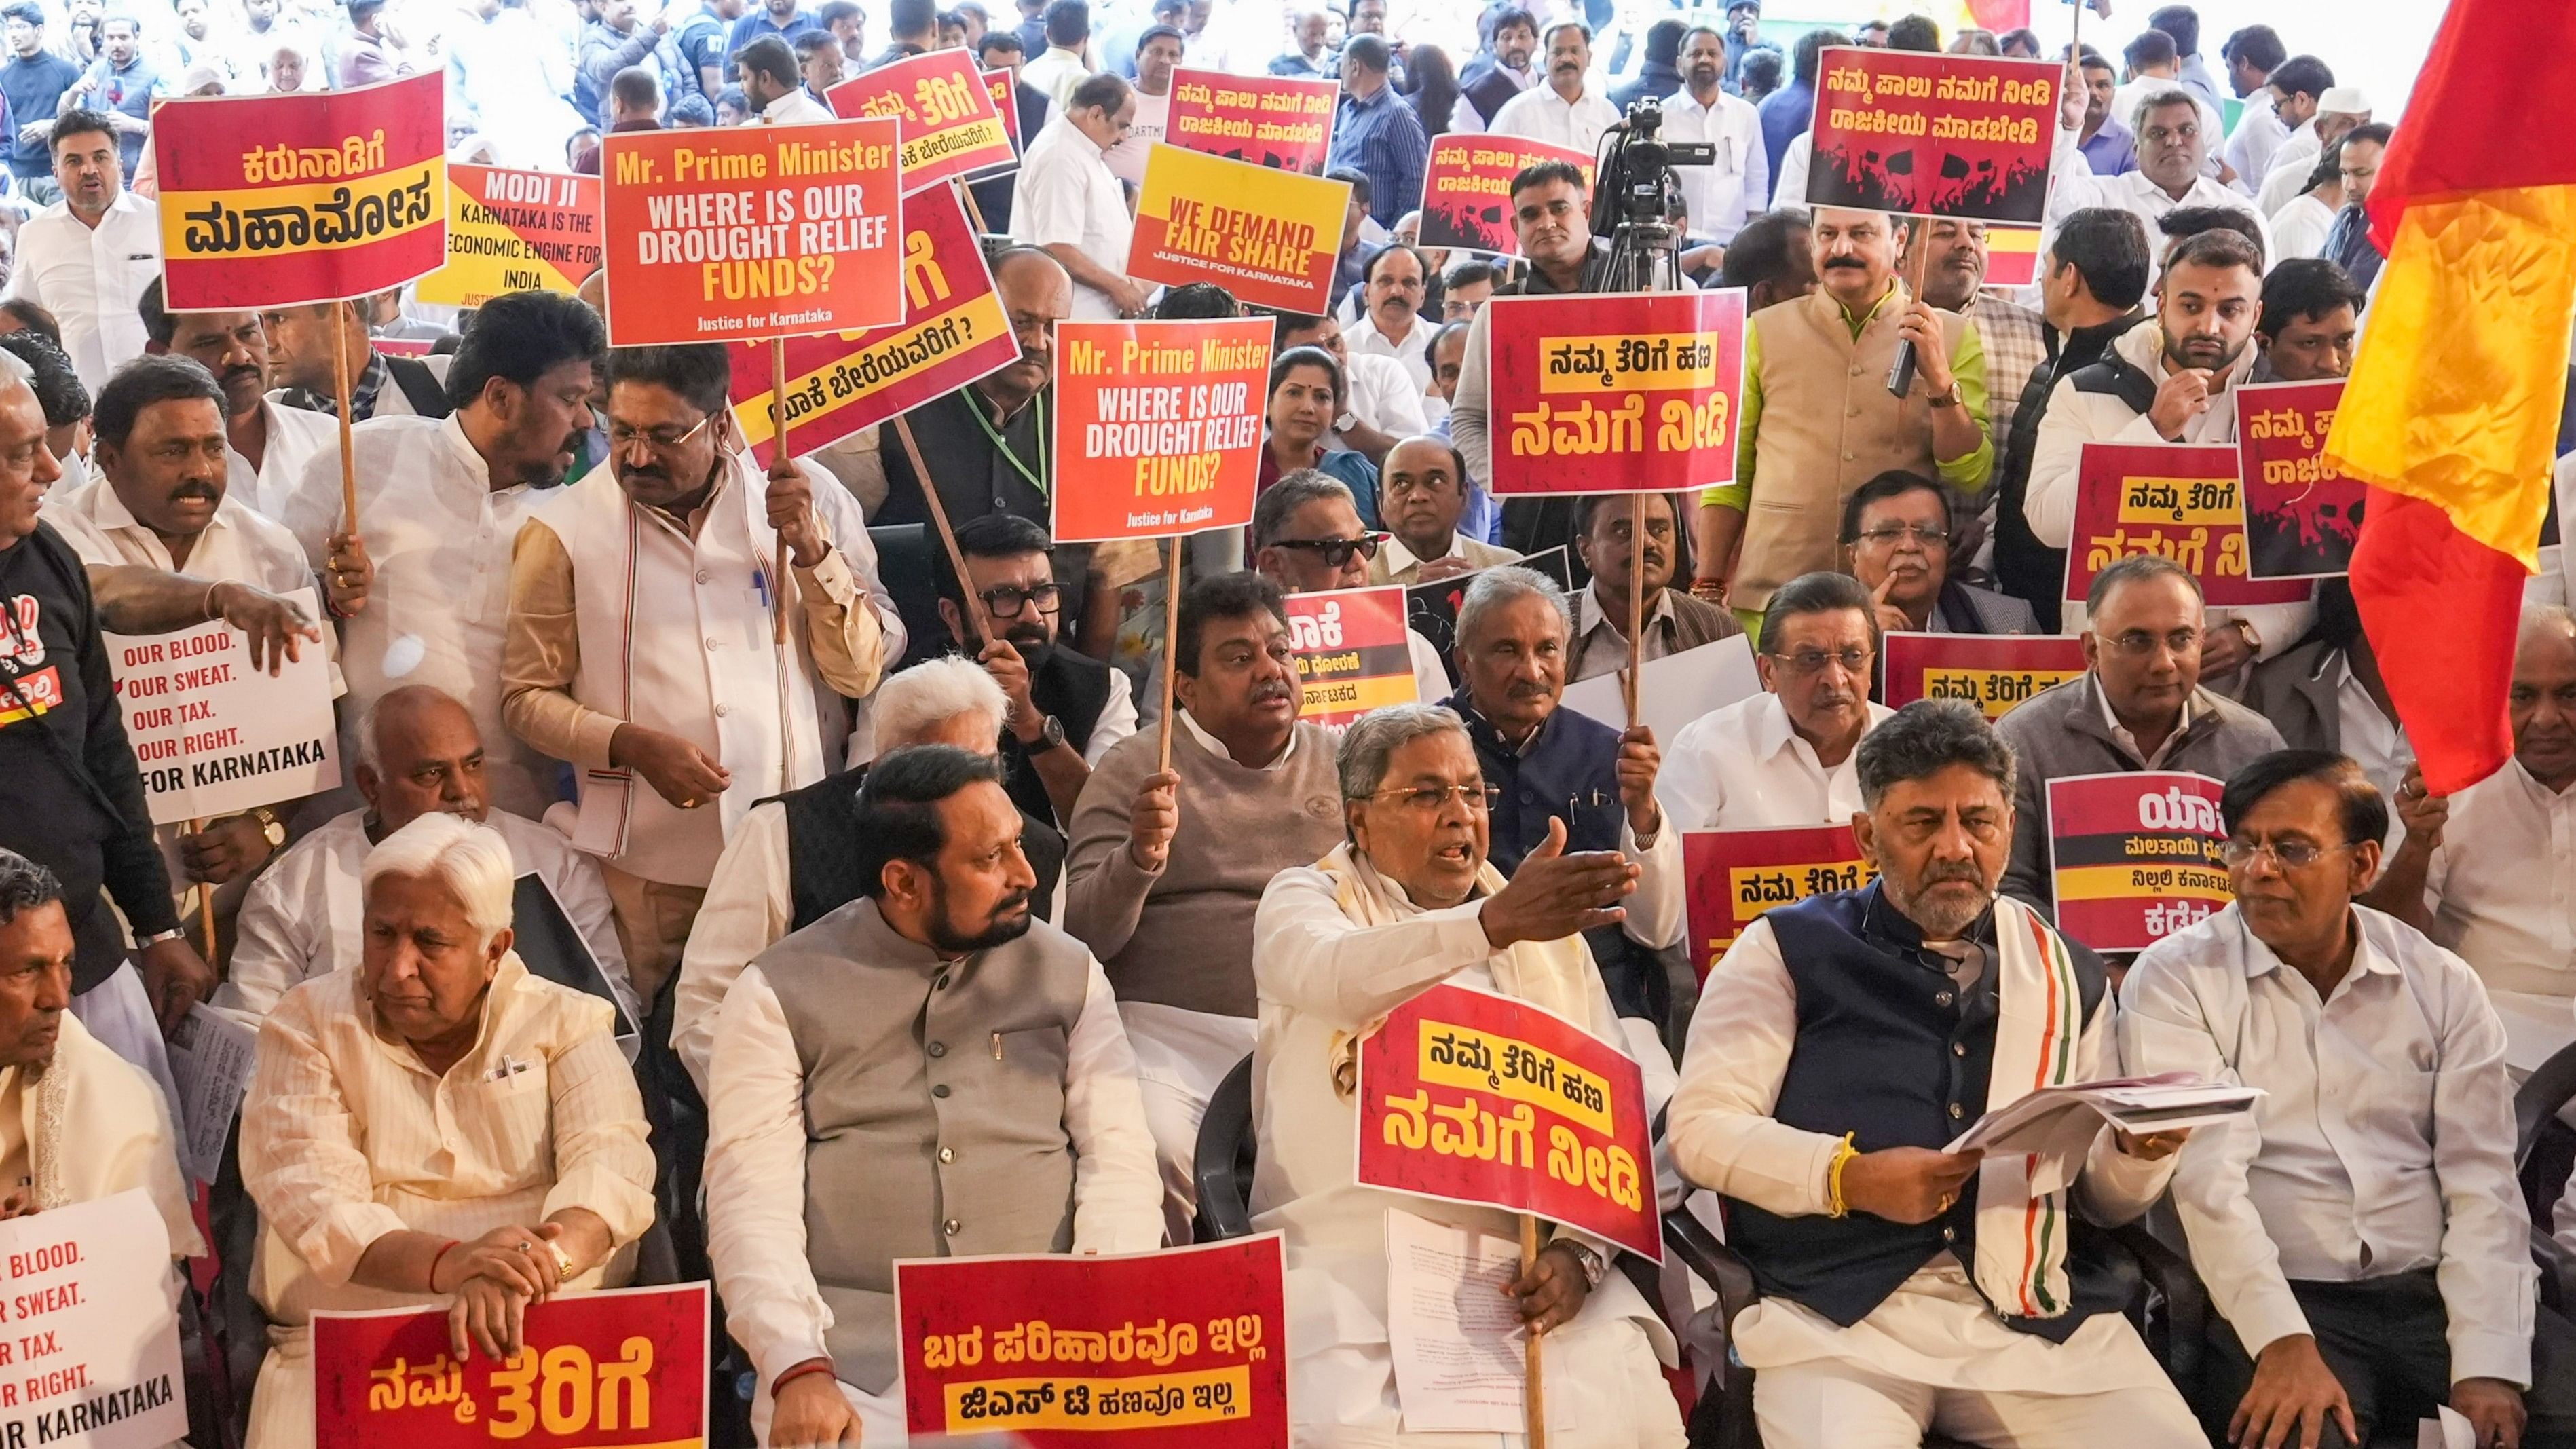 <div class="paragraphs"><p>Karnataka CM Siddaramaiah, Deputy CM D K Shivakumar and other Karnataka Congress leaders during a protest against the Centre in New Delhi last week. </p></div>